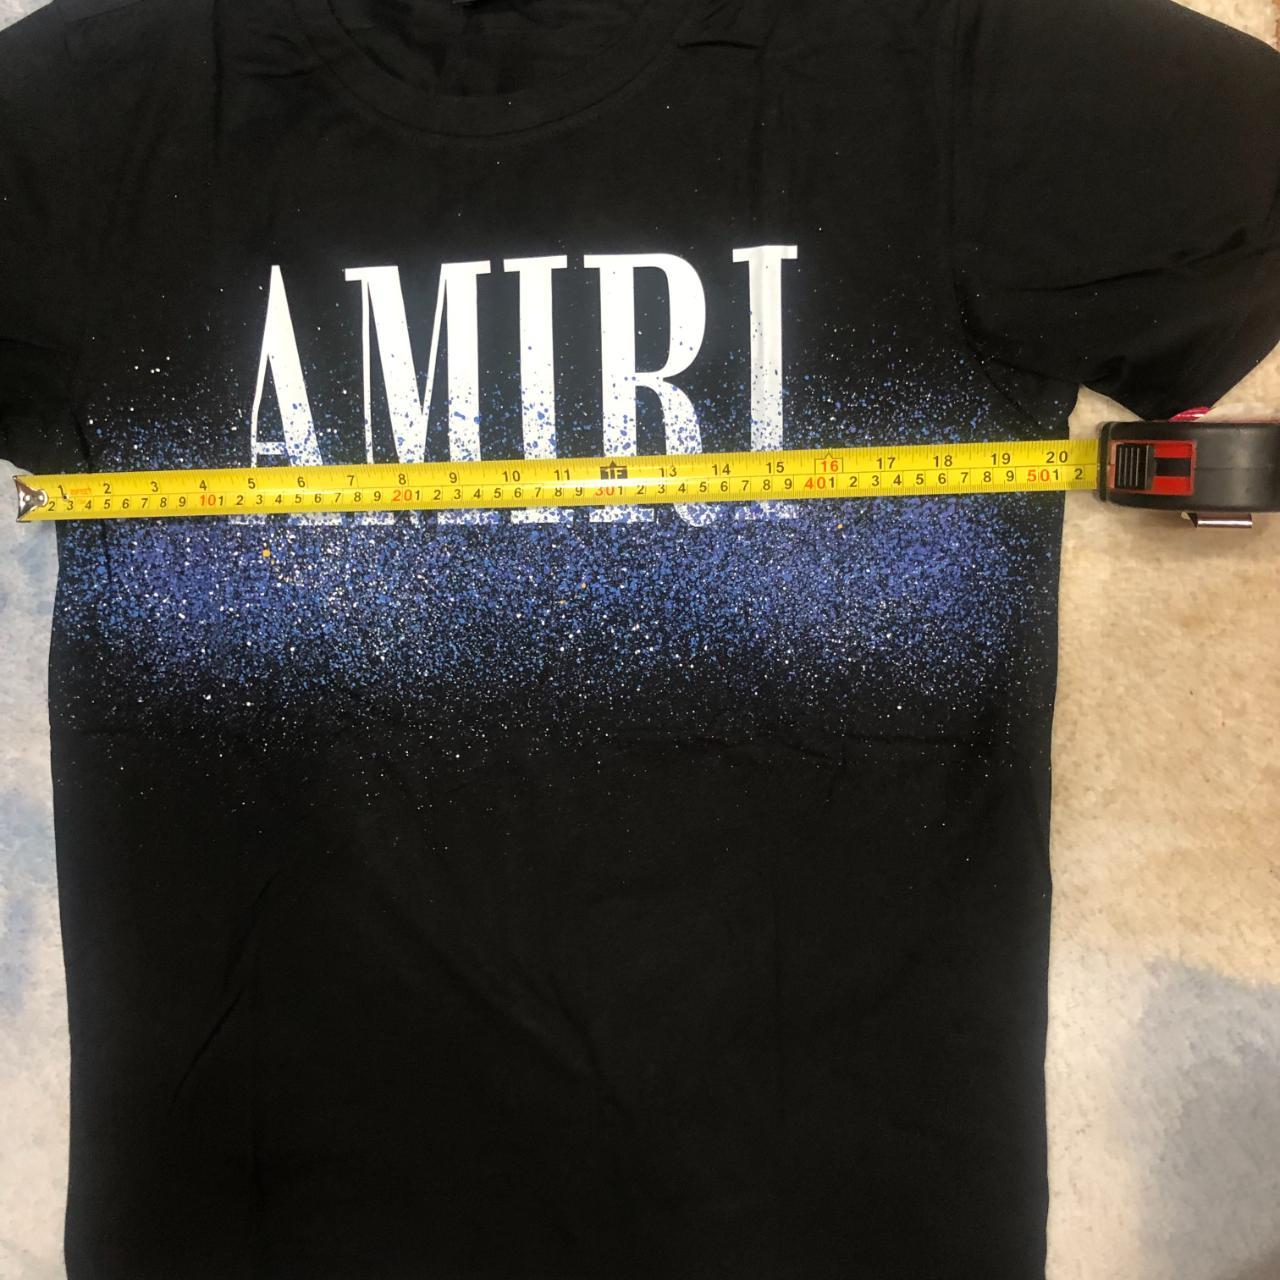 Product Image 4 - Amiri paint splatter tshirt 

BRAND